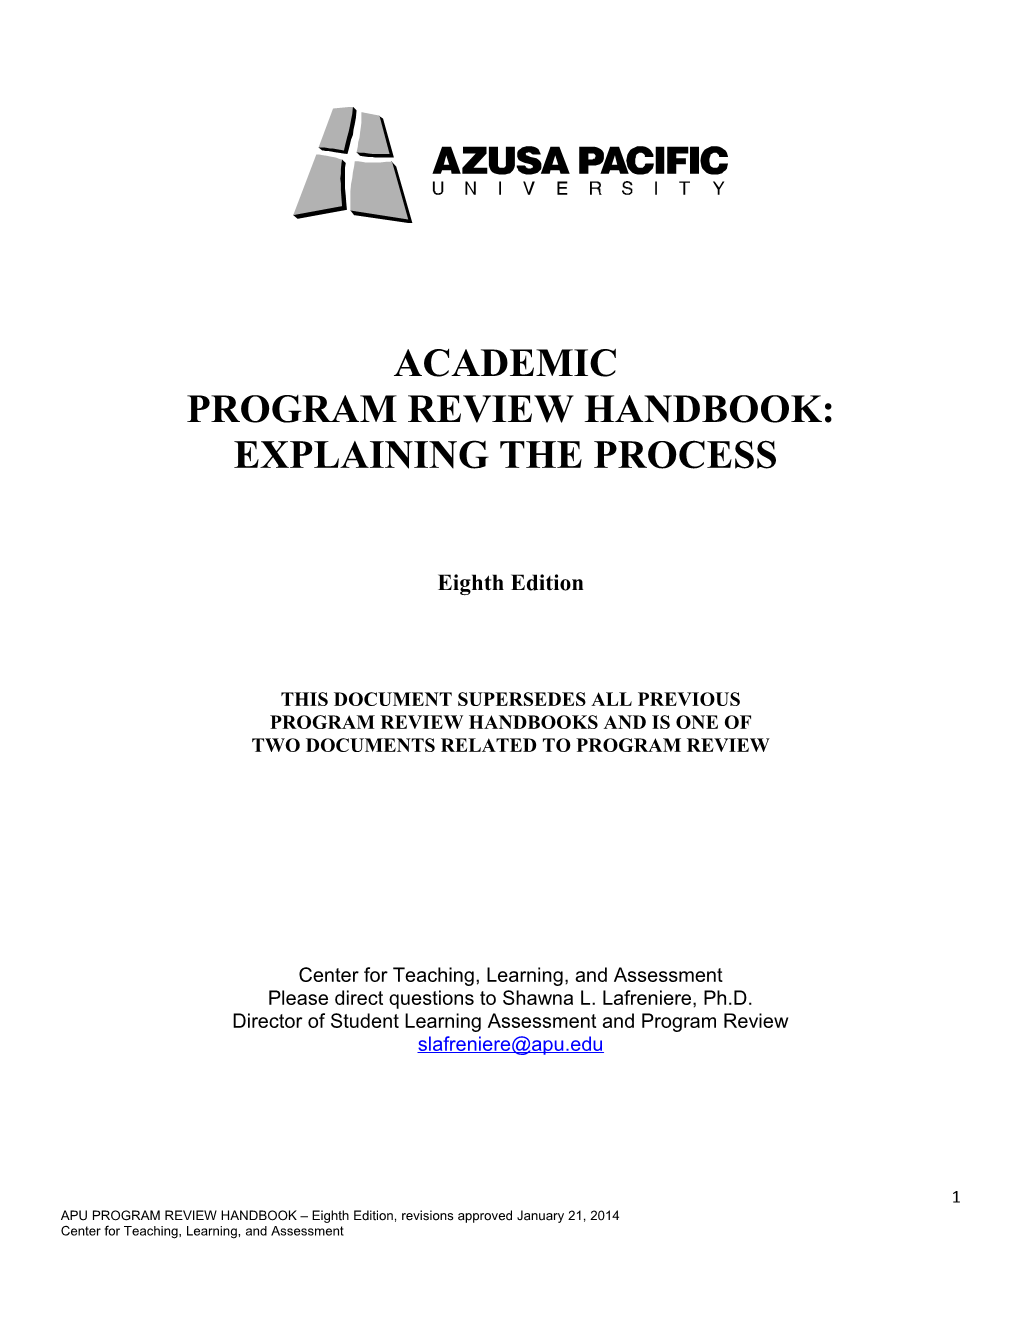 Program Review Handbook